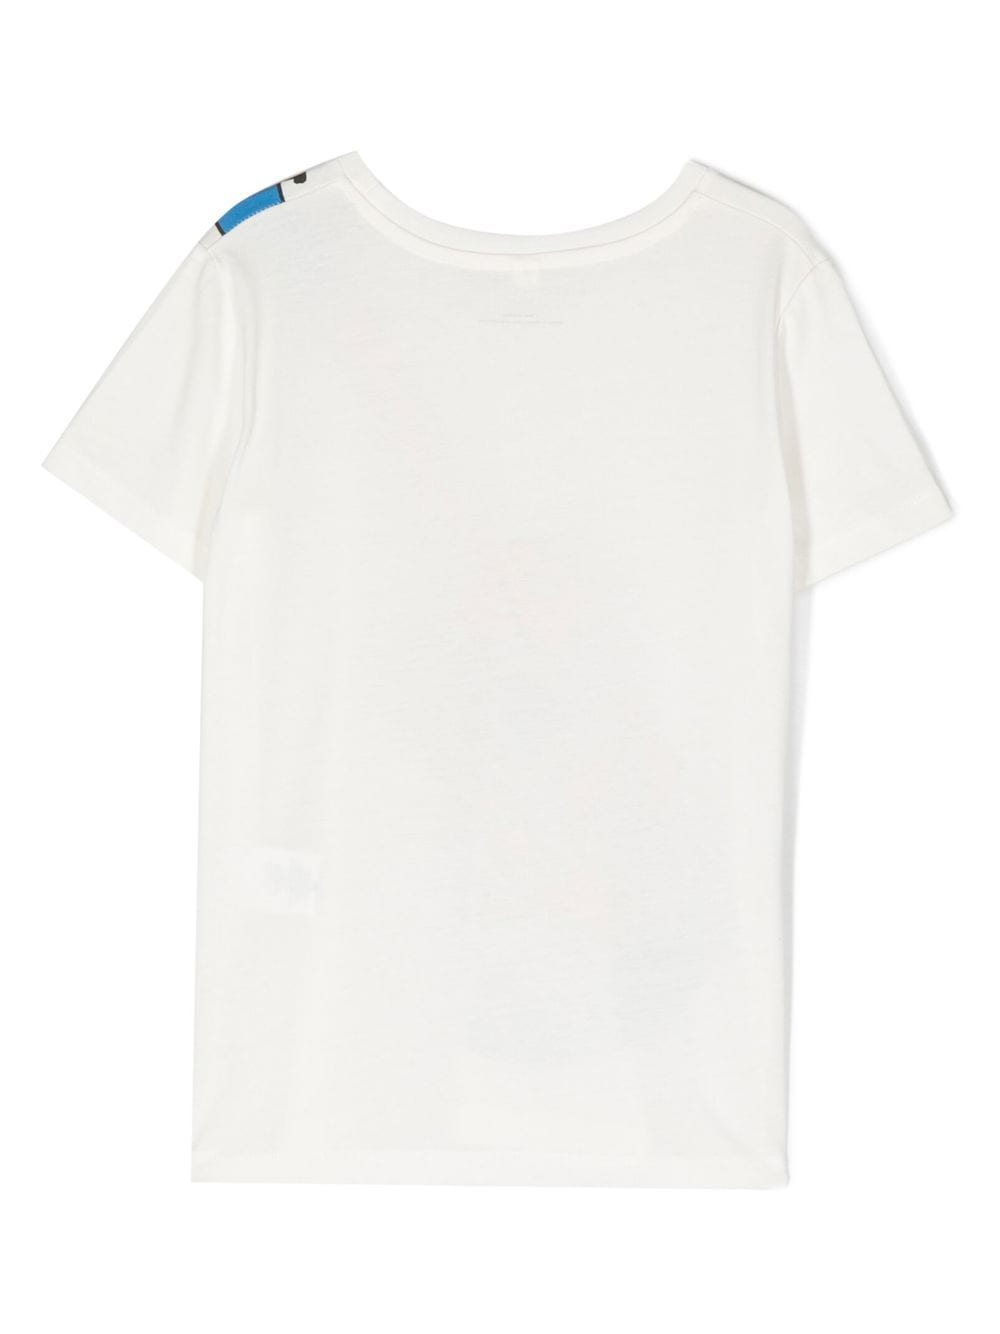 T-shirt bianca per bambina con stampa